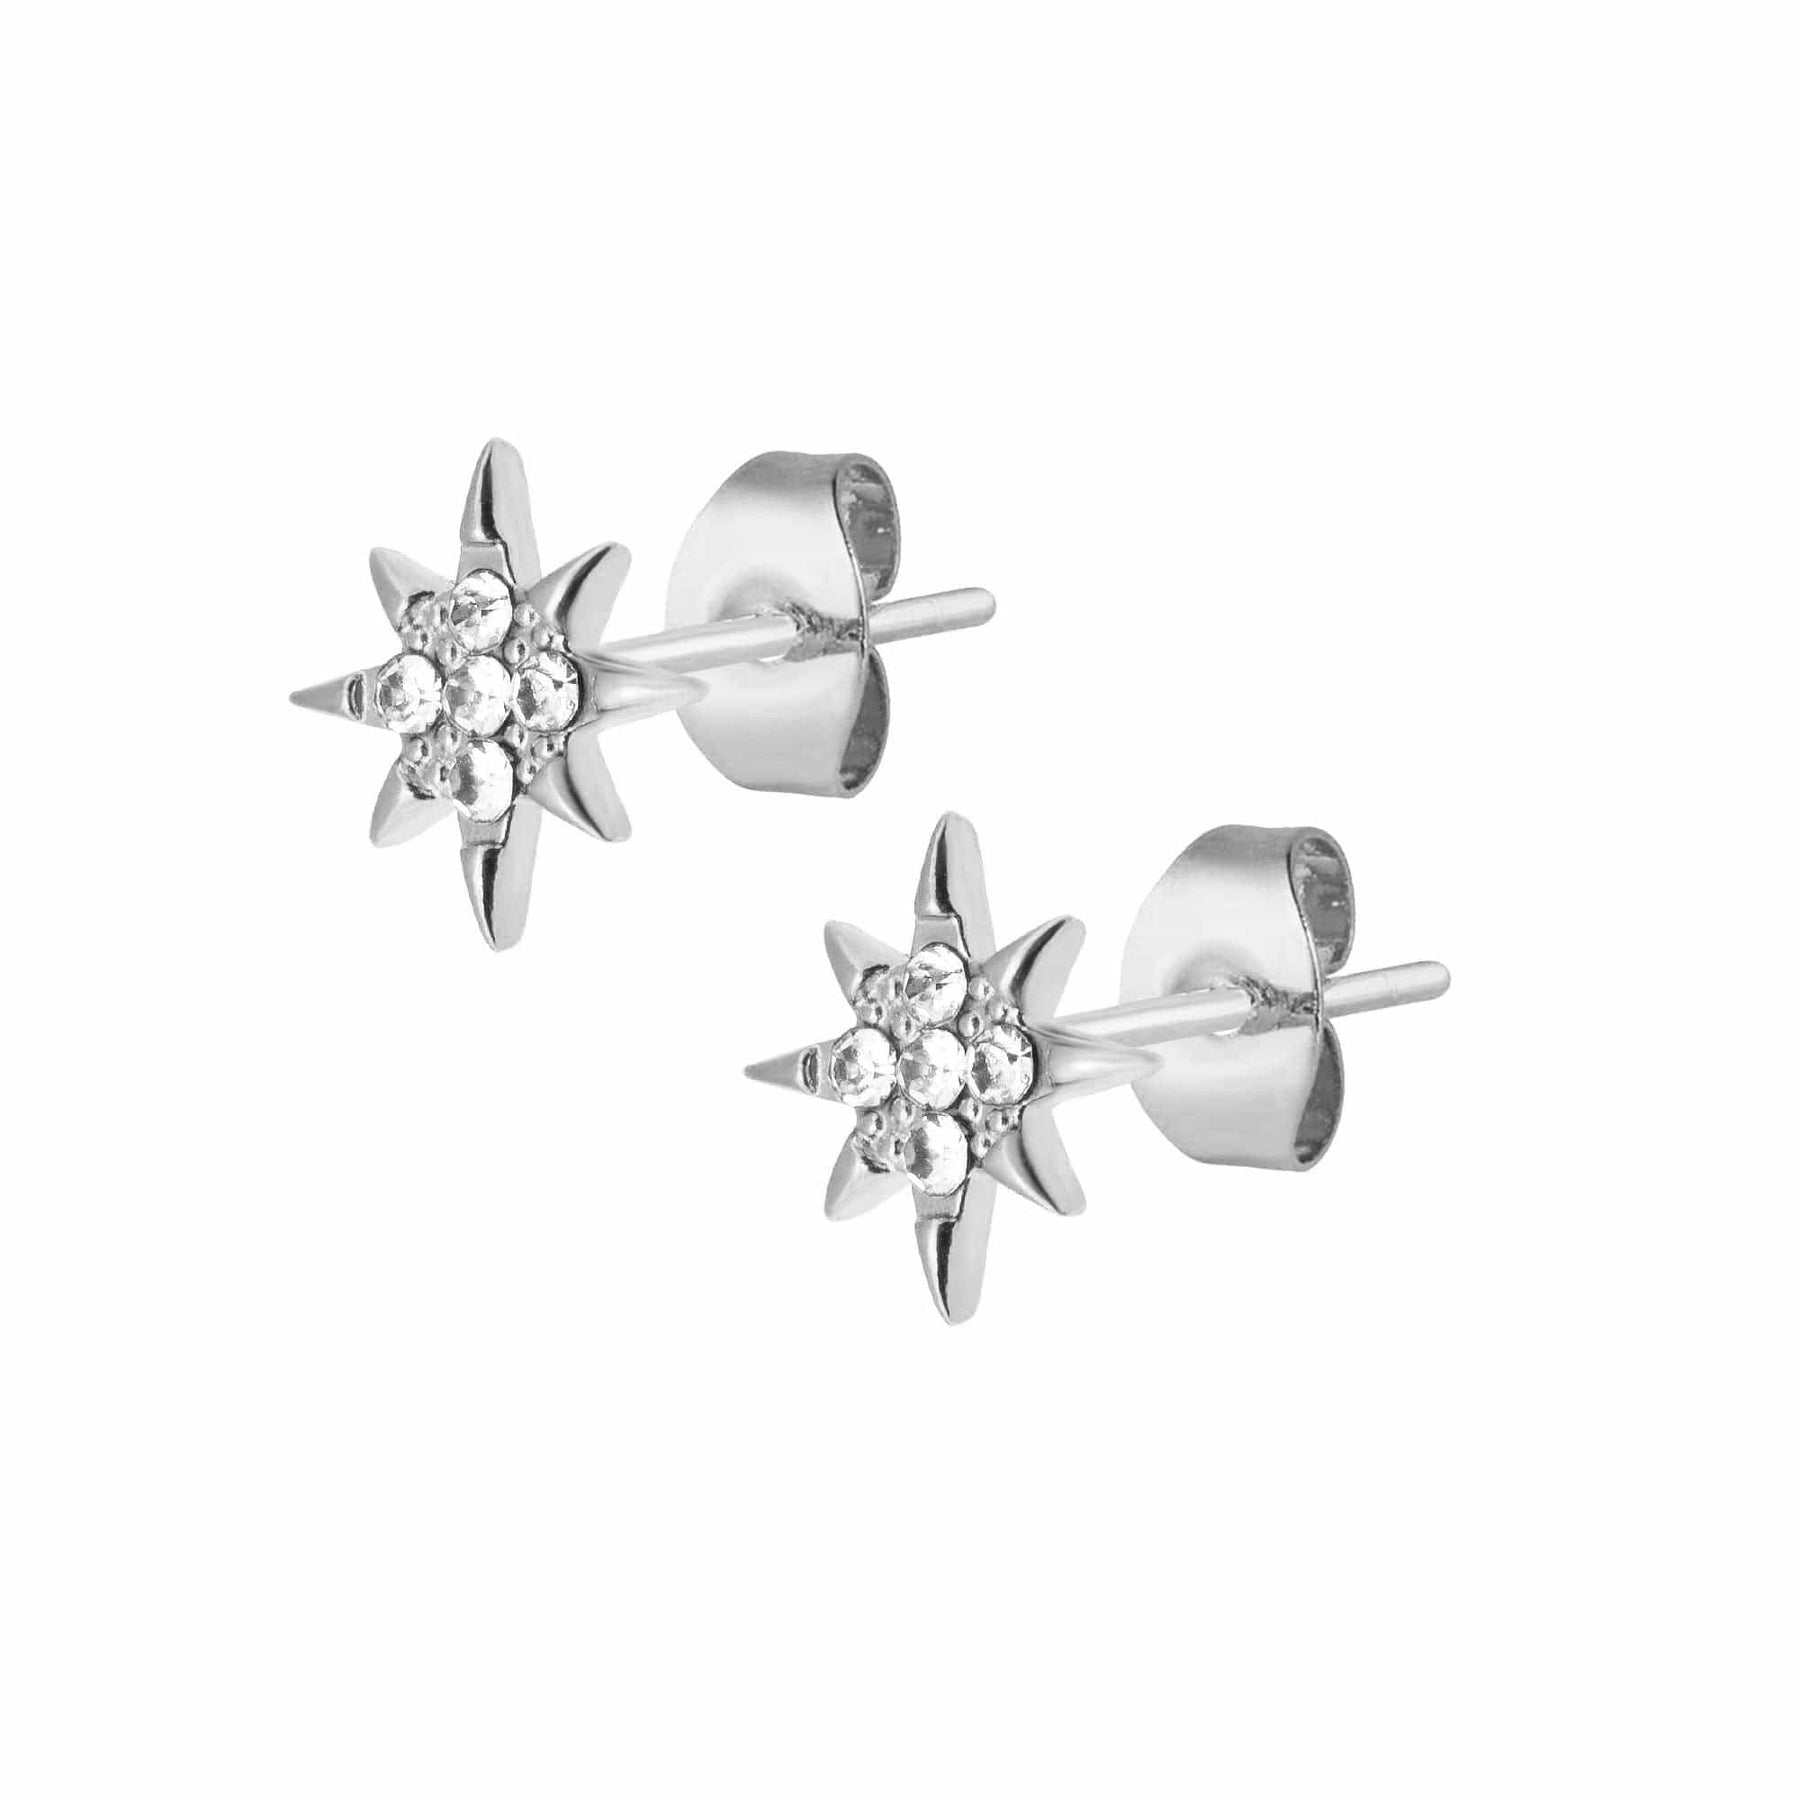 BohoMoon Stainless Steel Orion Stud Earrings Silver